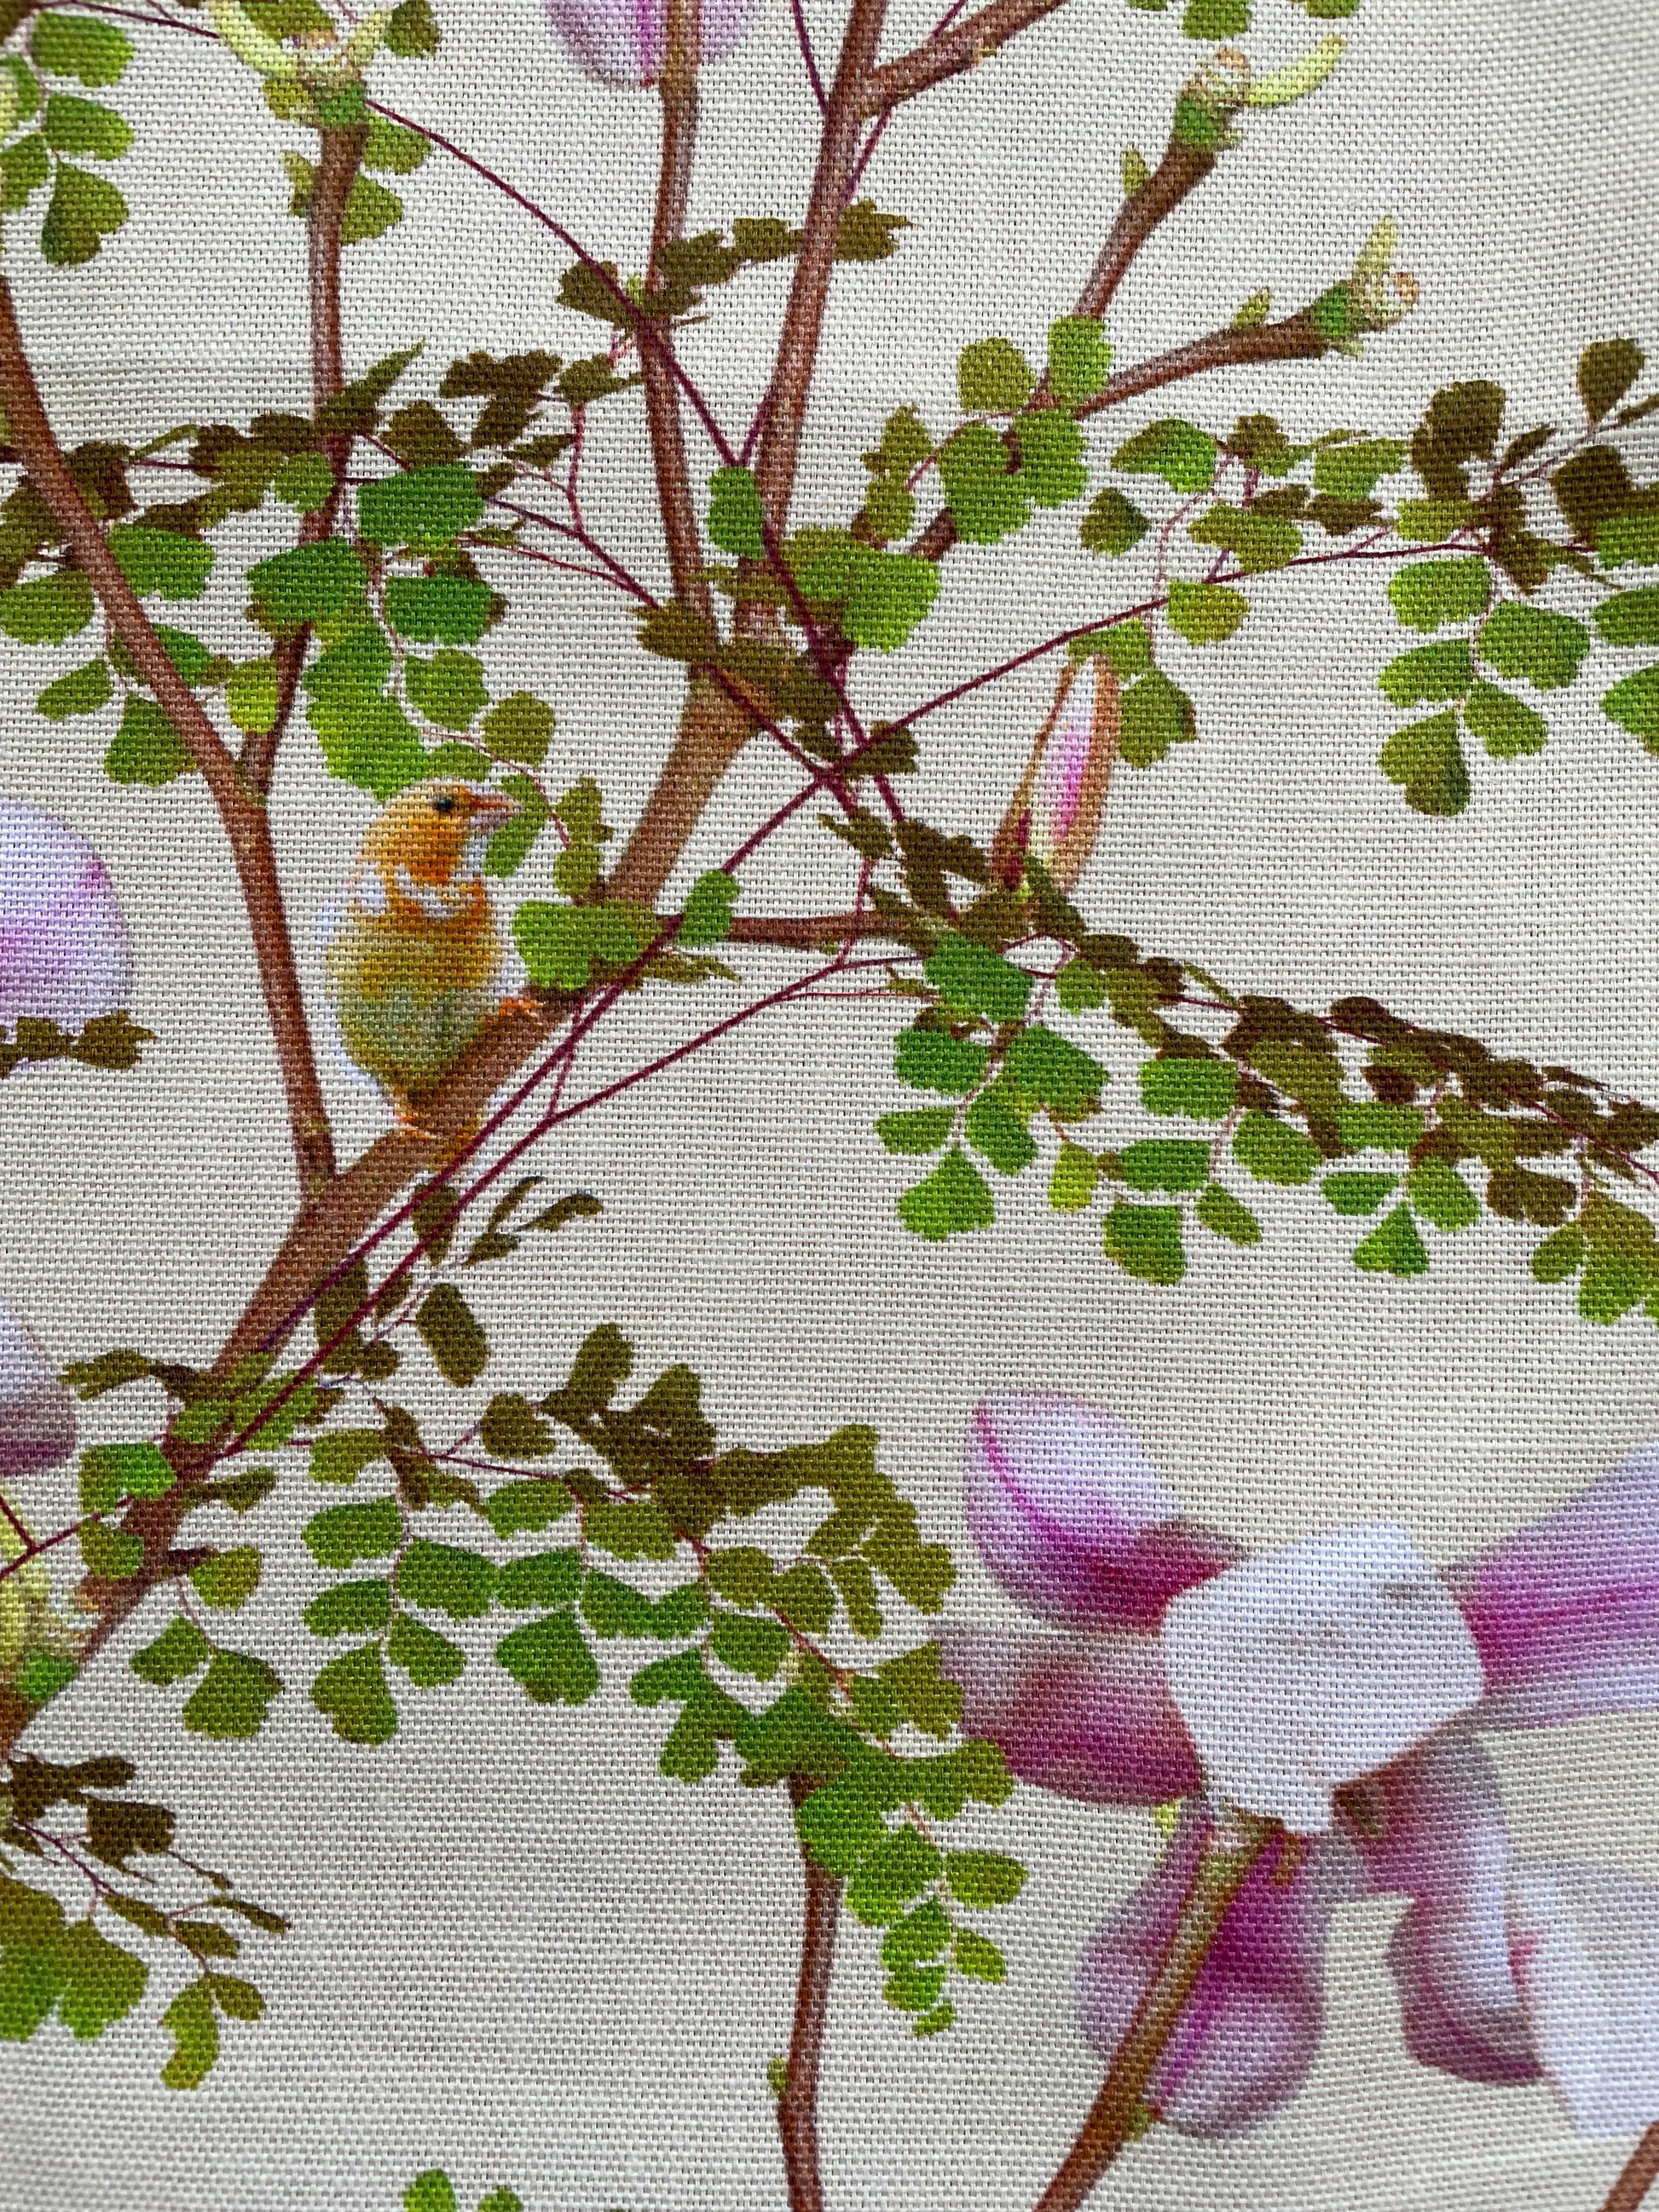 Tea Towel - Michael Angove - Michael Angove Tea towel - Magnolia Blossoms